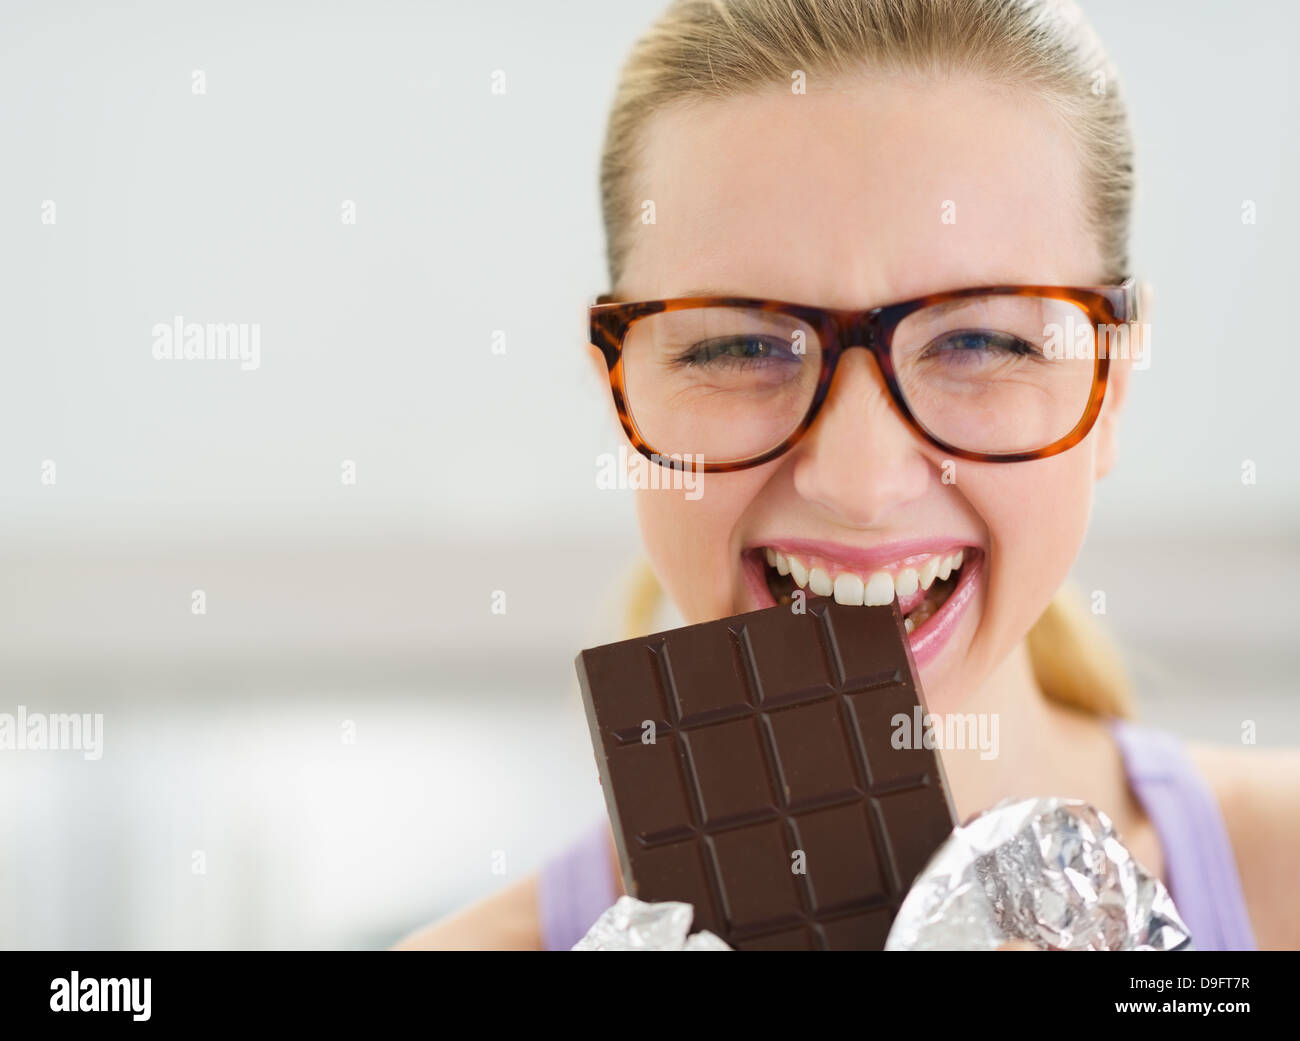 Happy teenage girl eating chocolate bar Stock Photo